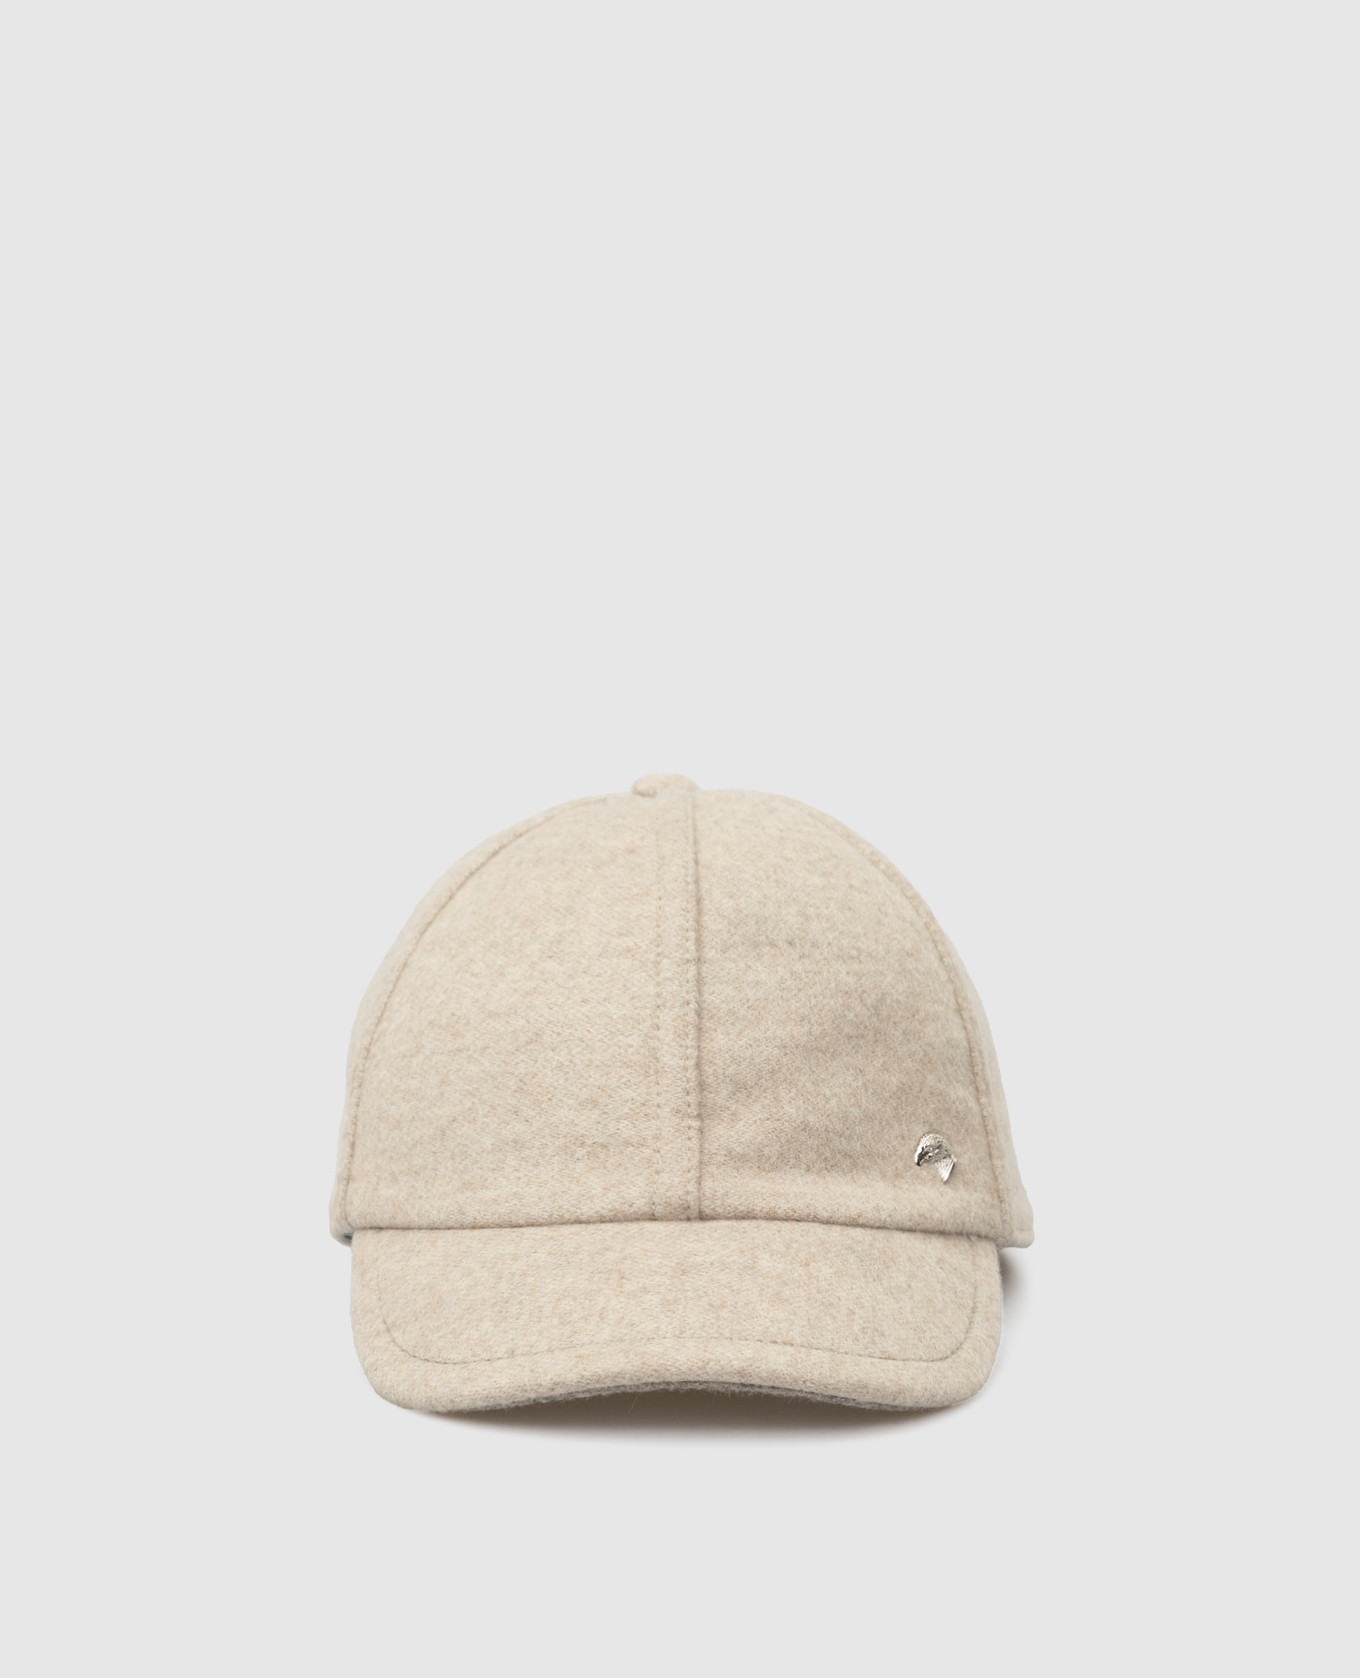 Children's light beige cashmere cap